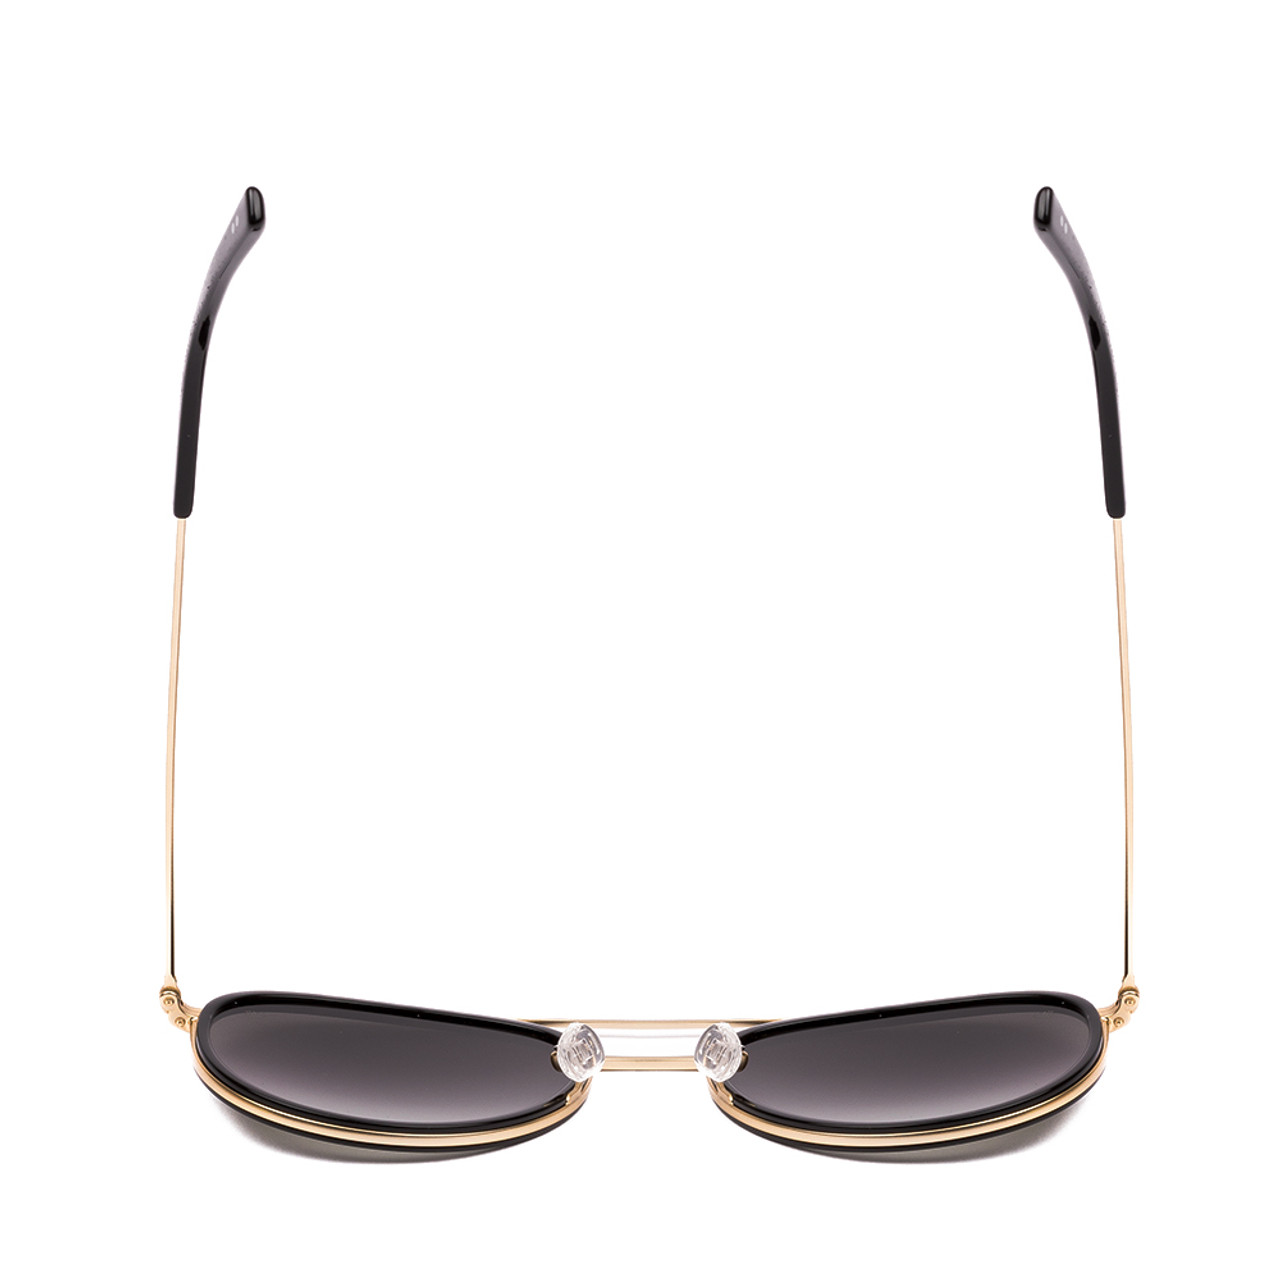 Top View of SITO SHADES KITSCH Womens Pilot Full Rim Sunglasses in Black Gold/Horizon 55mm